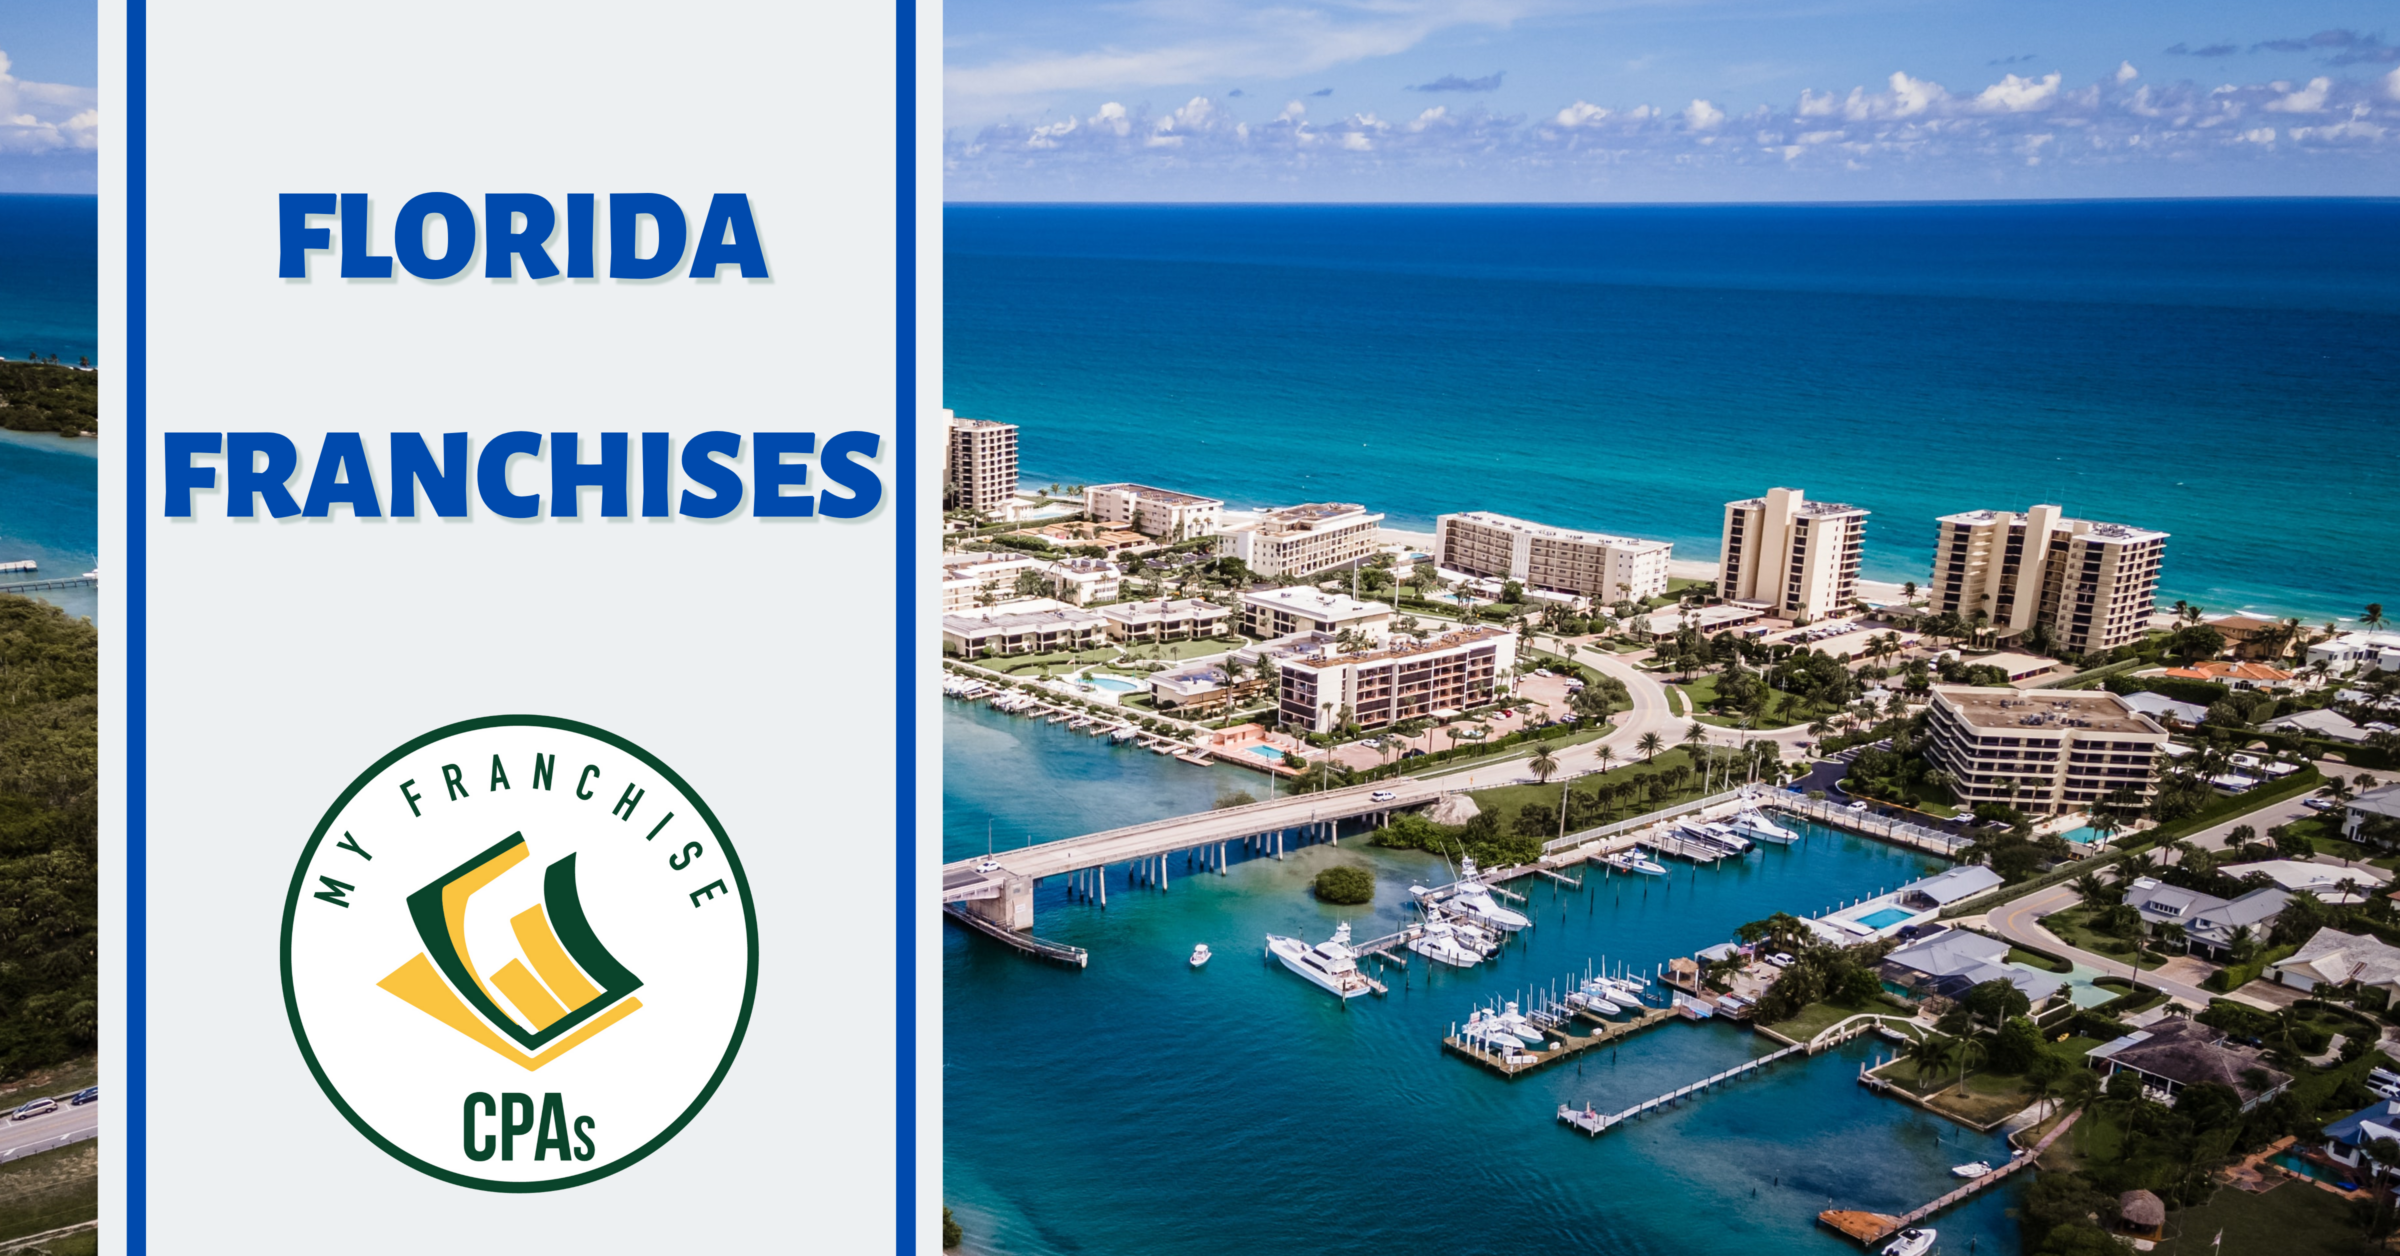 Florida Franchise Opportunities, Best Franchises for Florida